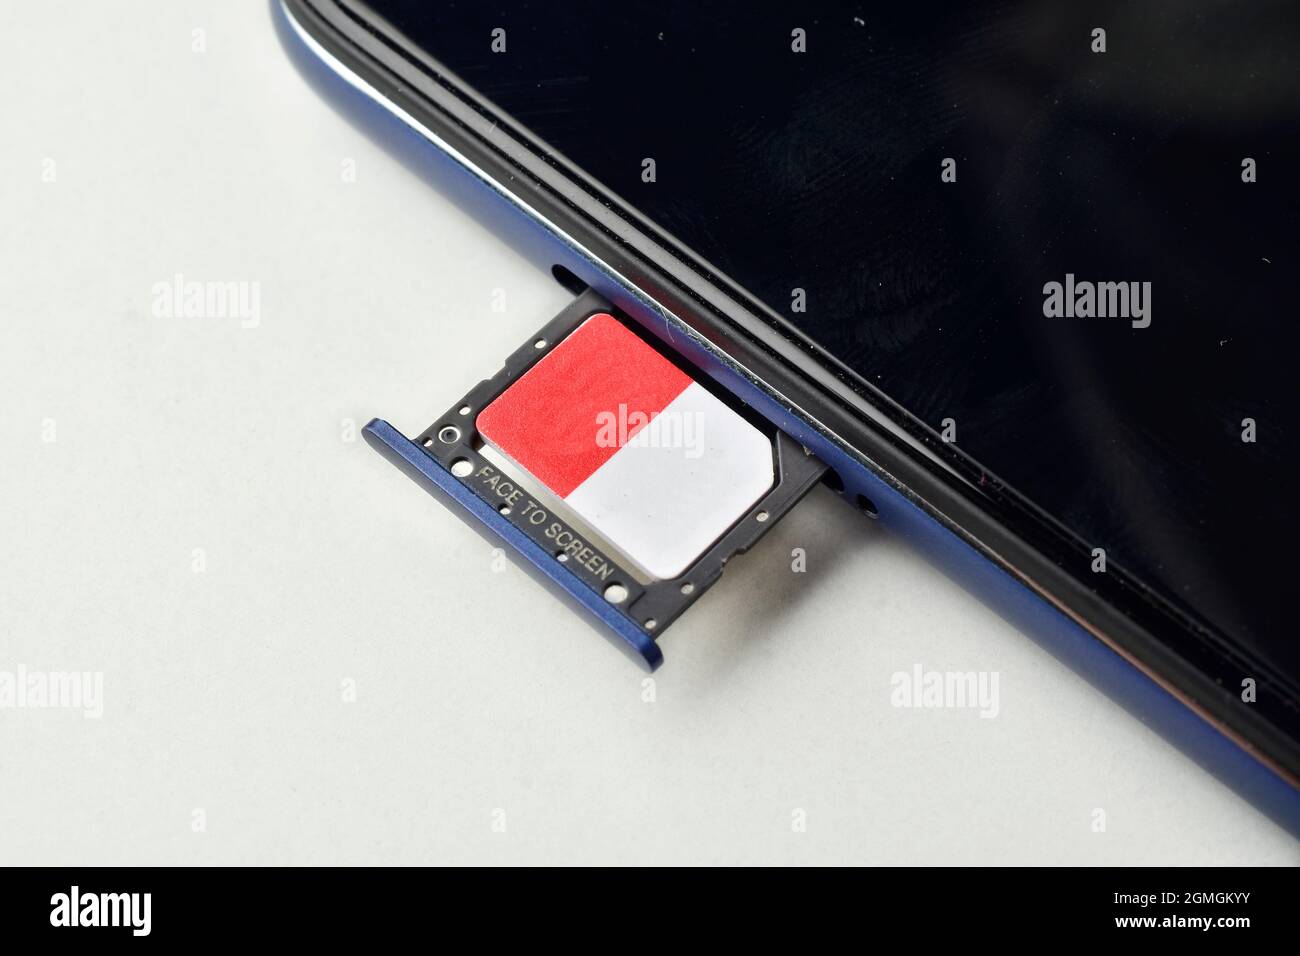 mini sim card with smartphone on white background Stock Photo - Alamy